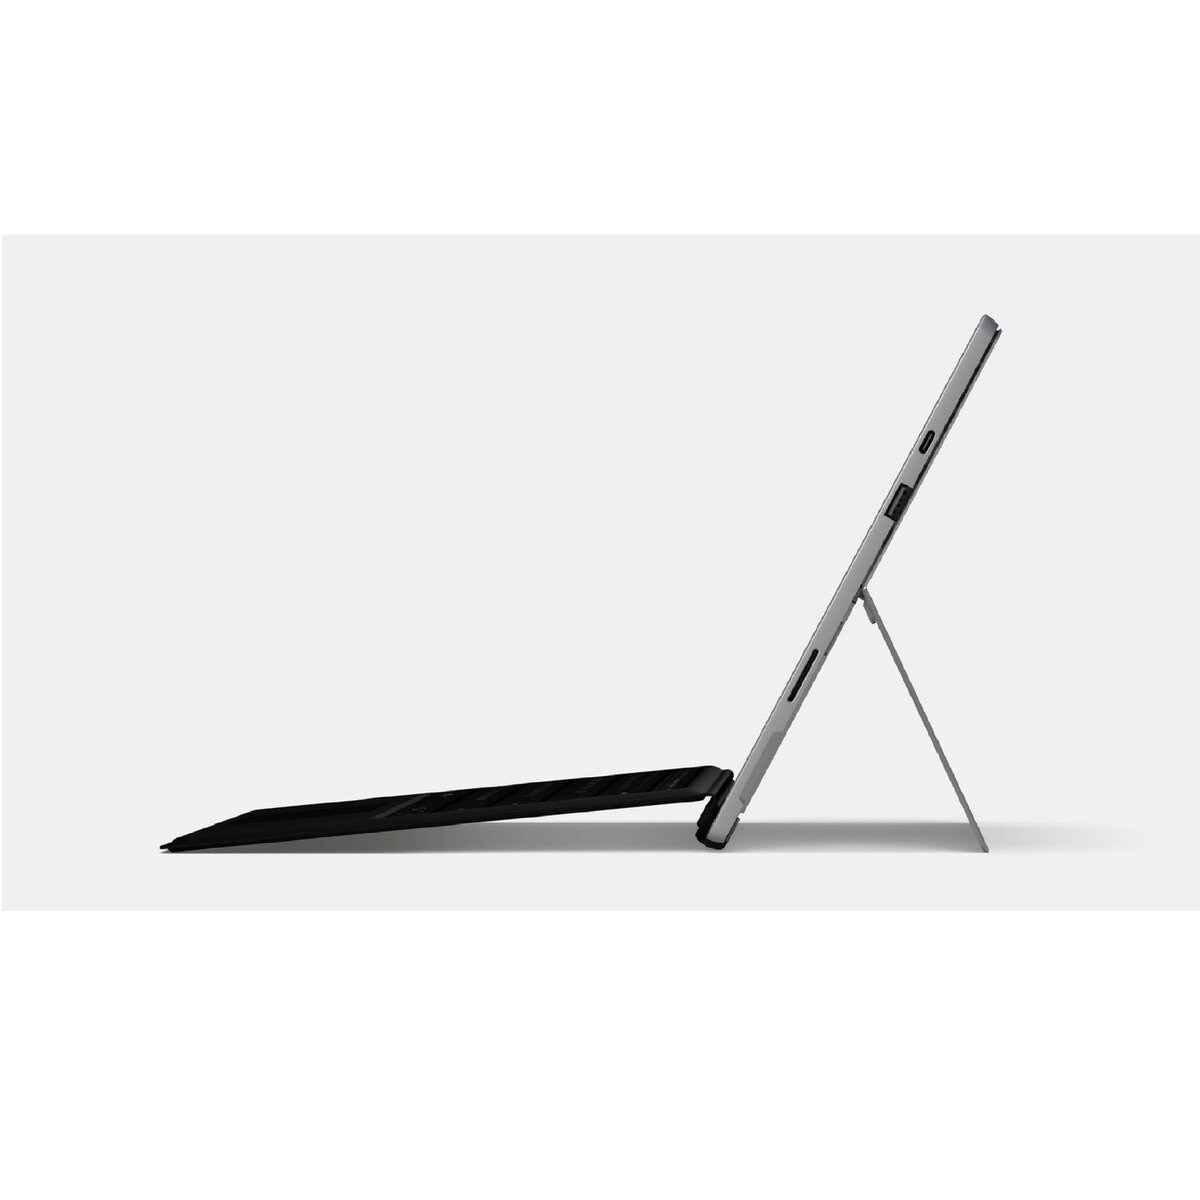 Surface Pro 7 i5 /Surfaceペン/タイプカバー/ケース